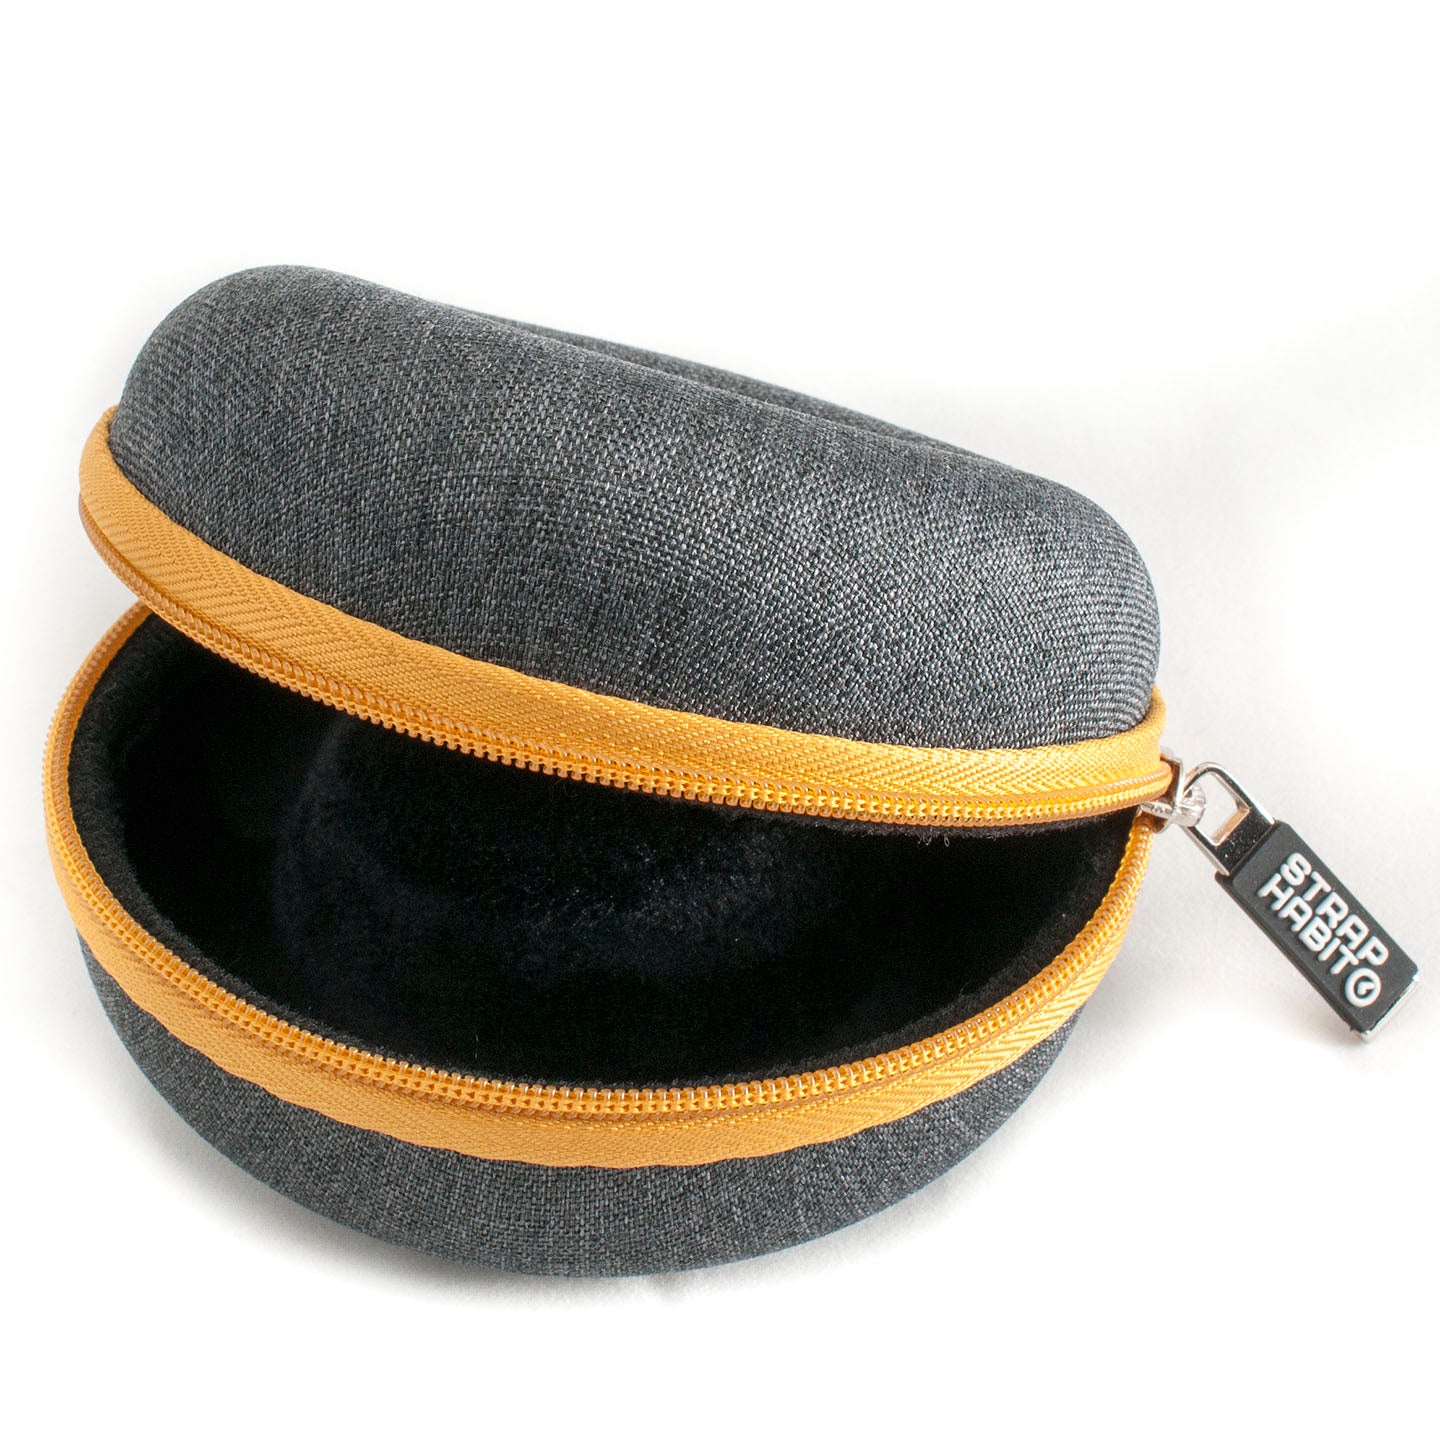 Watch travel case pod zipper gray black yellow gold hard storage protect